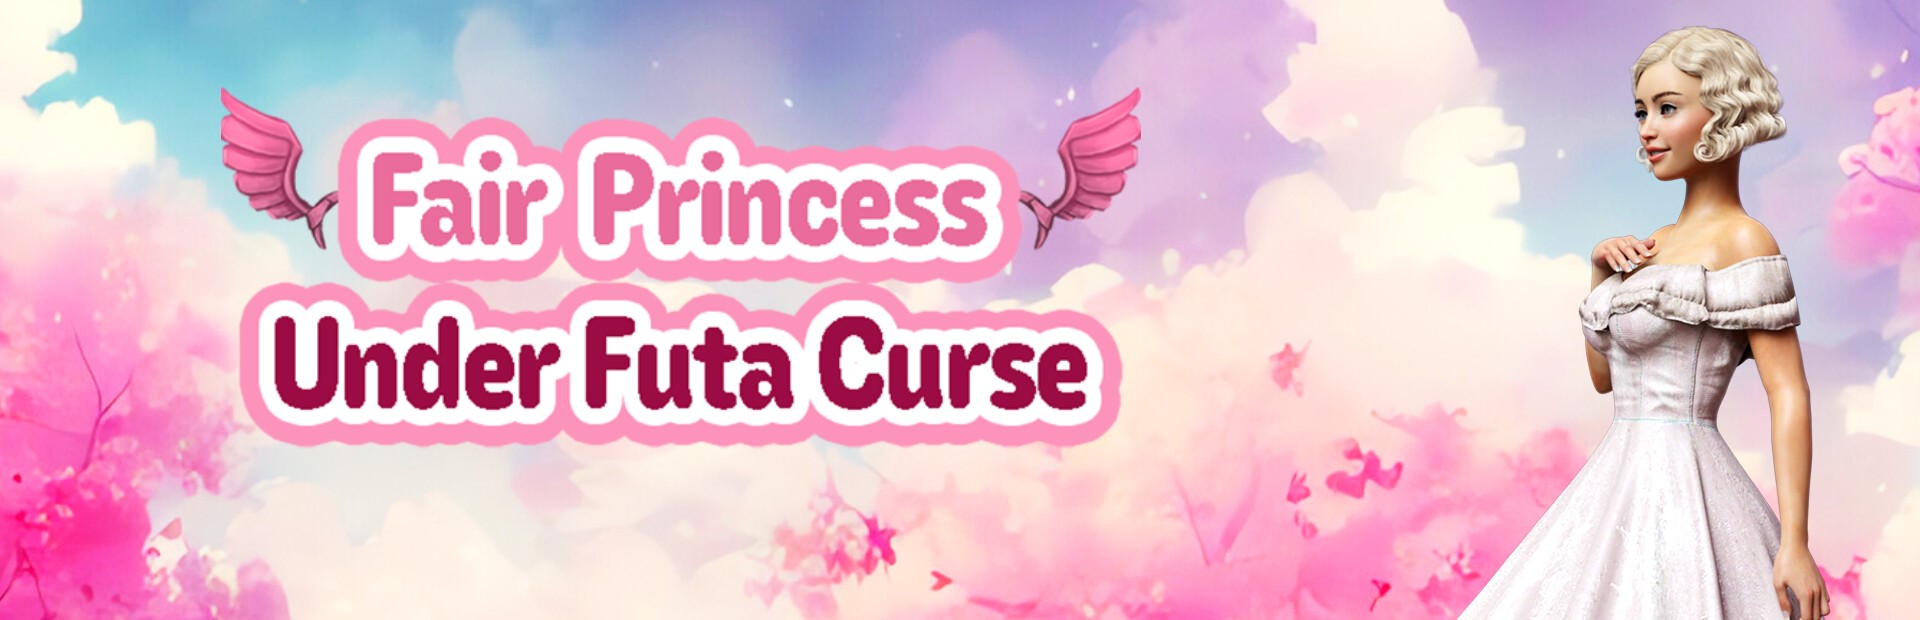 Fair Princess Under Futa Curse poster